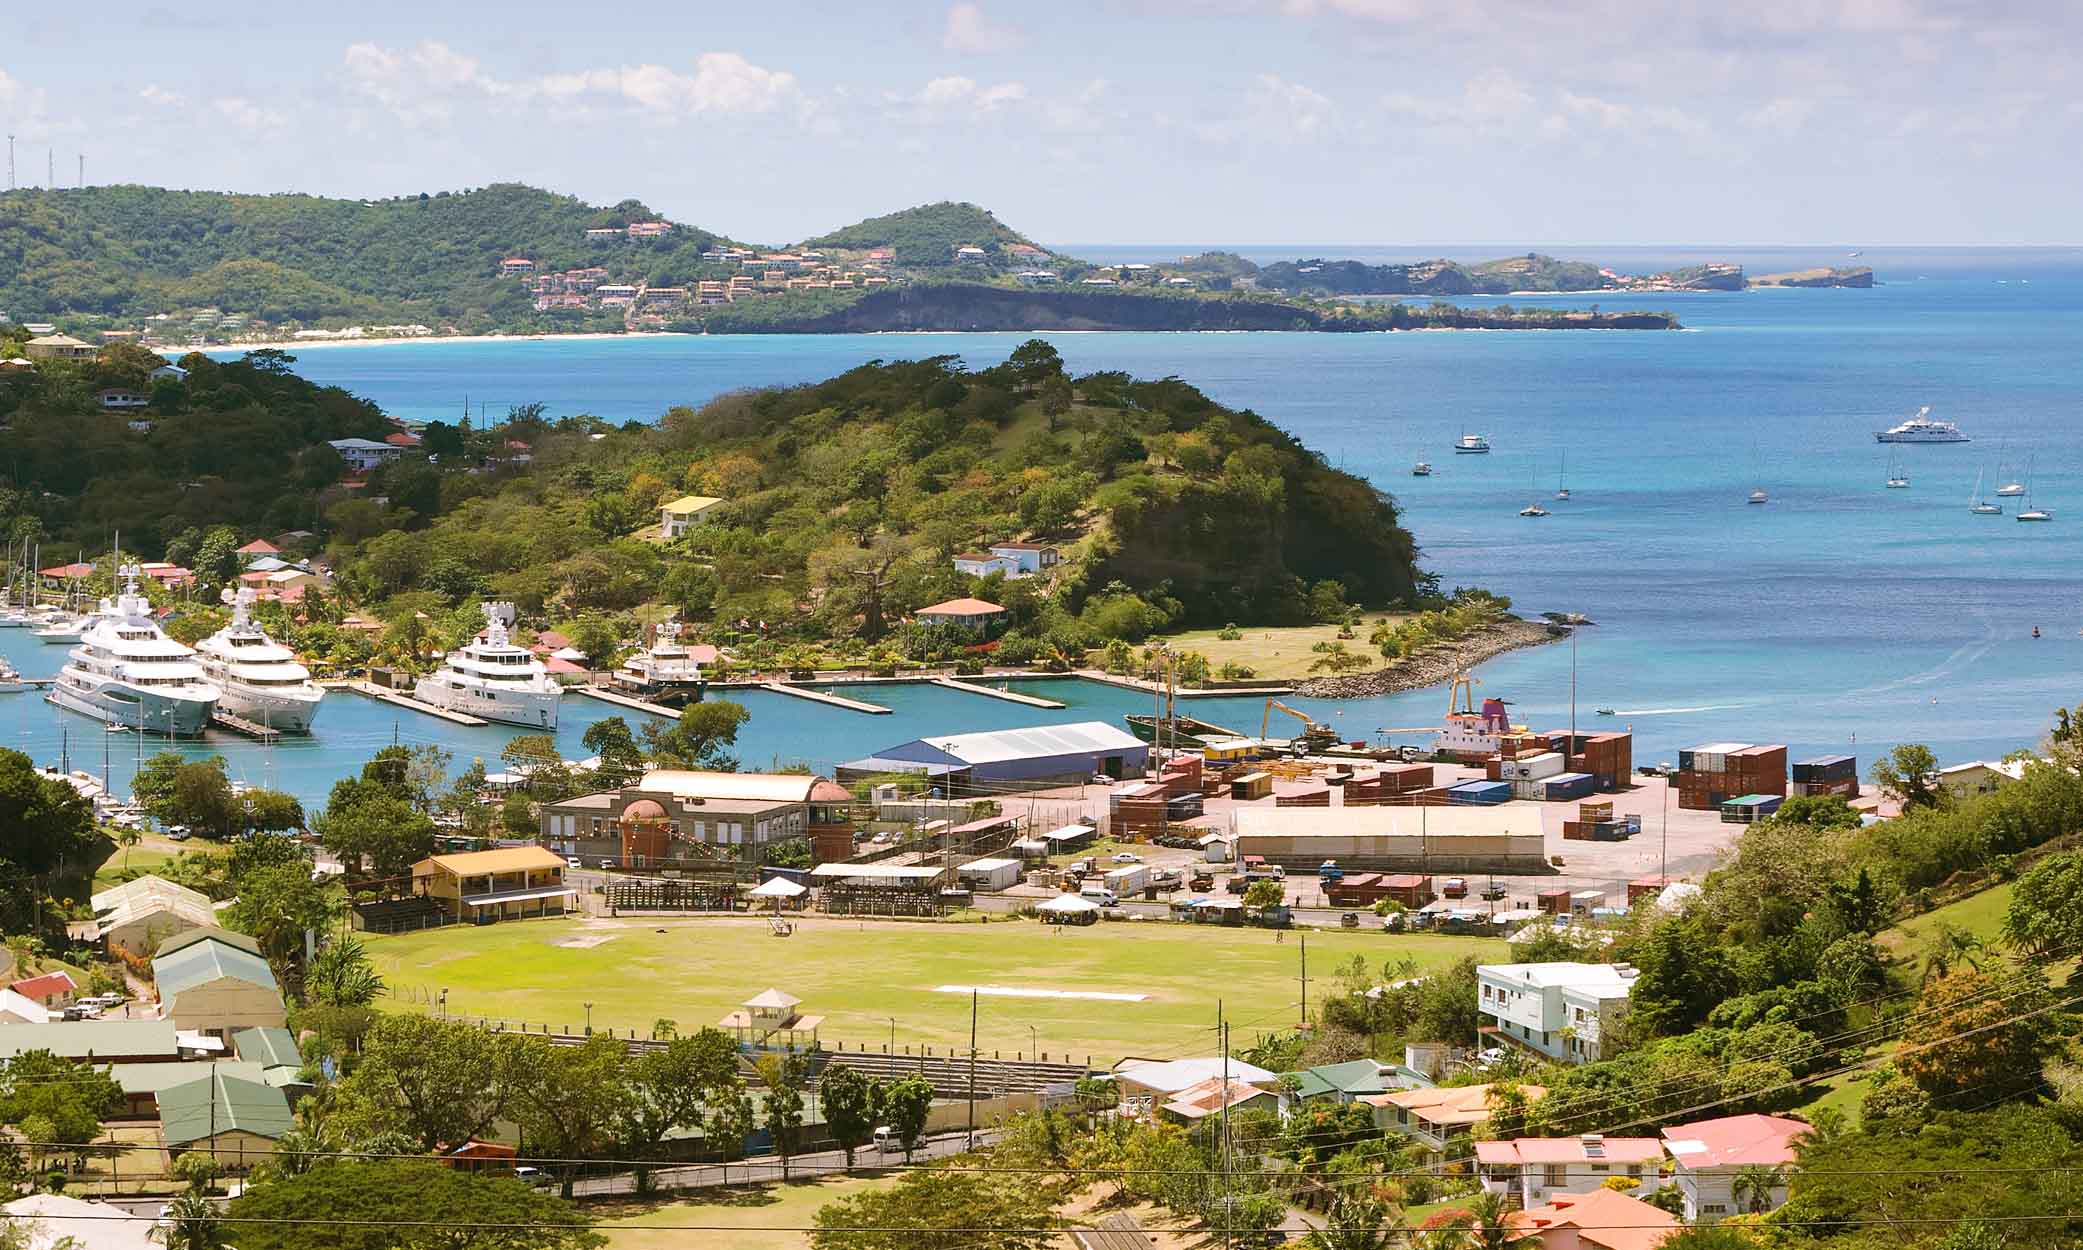 Look how gorgeous Grenada is.